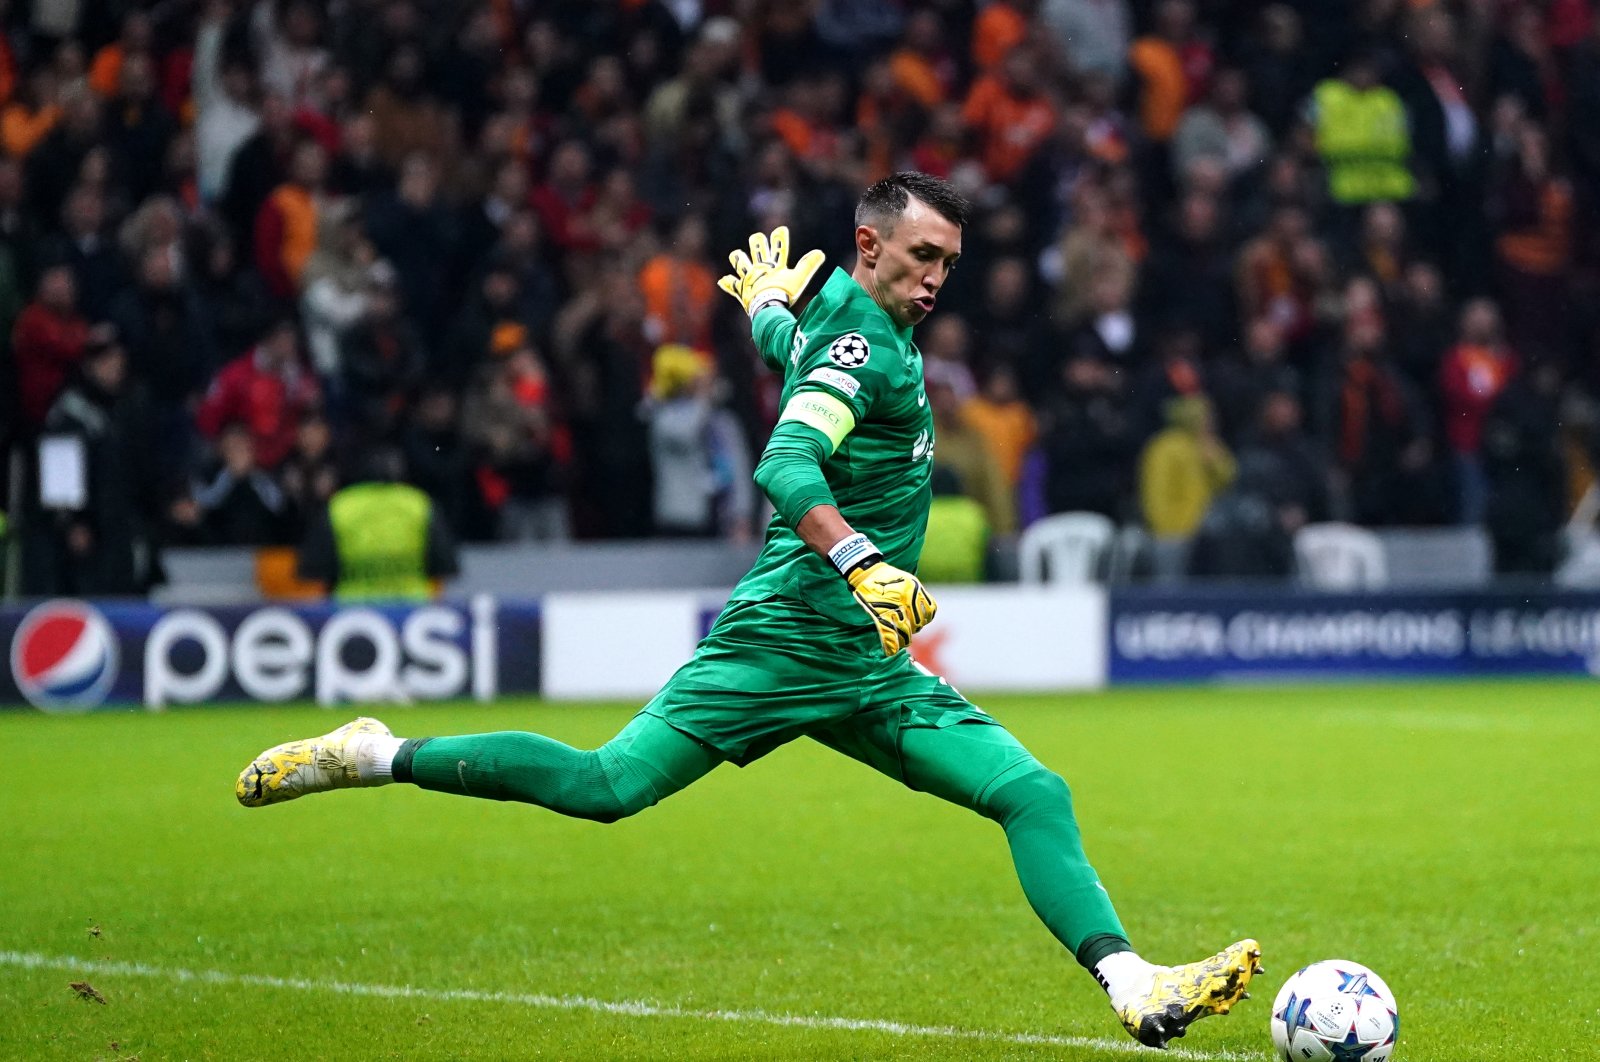 Galatasaray veteran goalkeeper Muslera earns spot among Europe's best